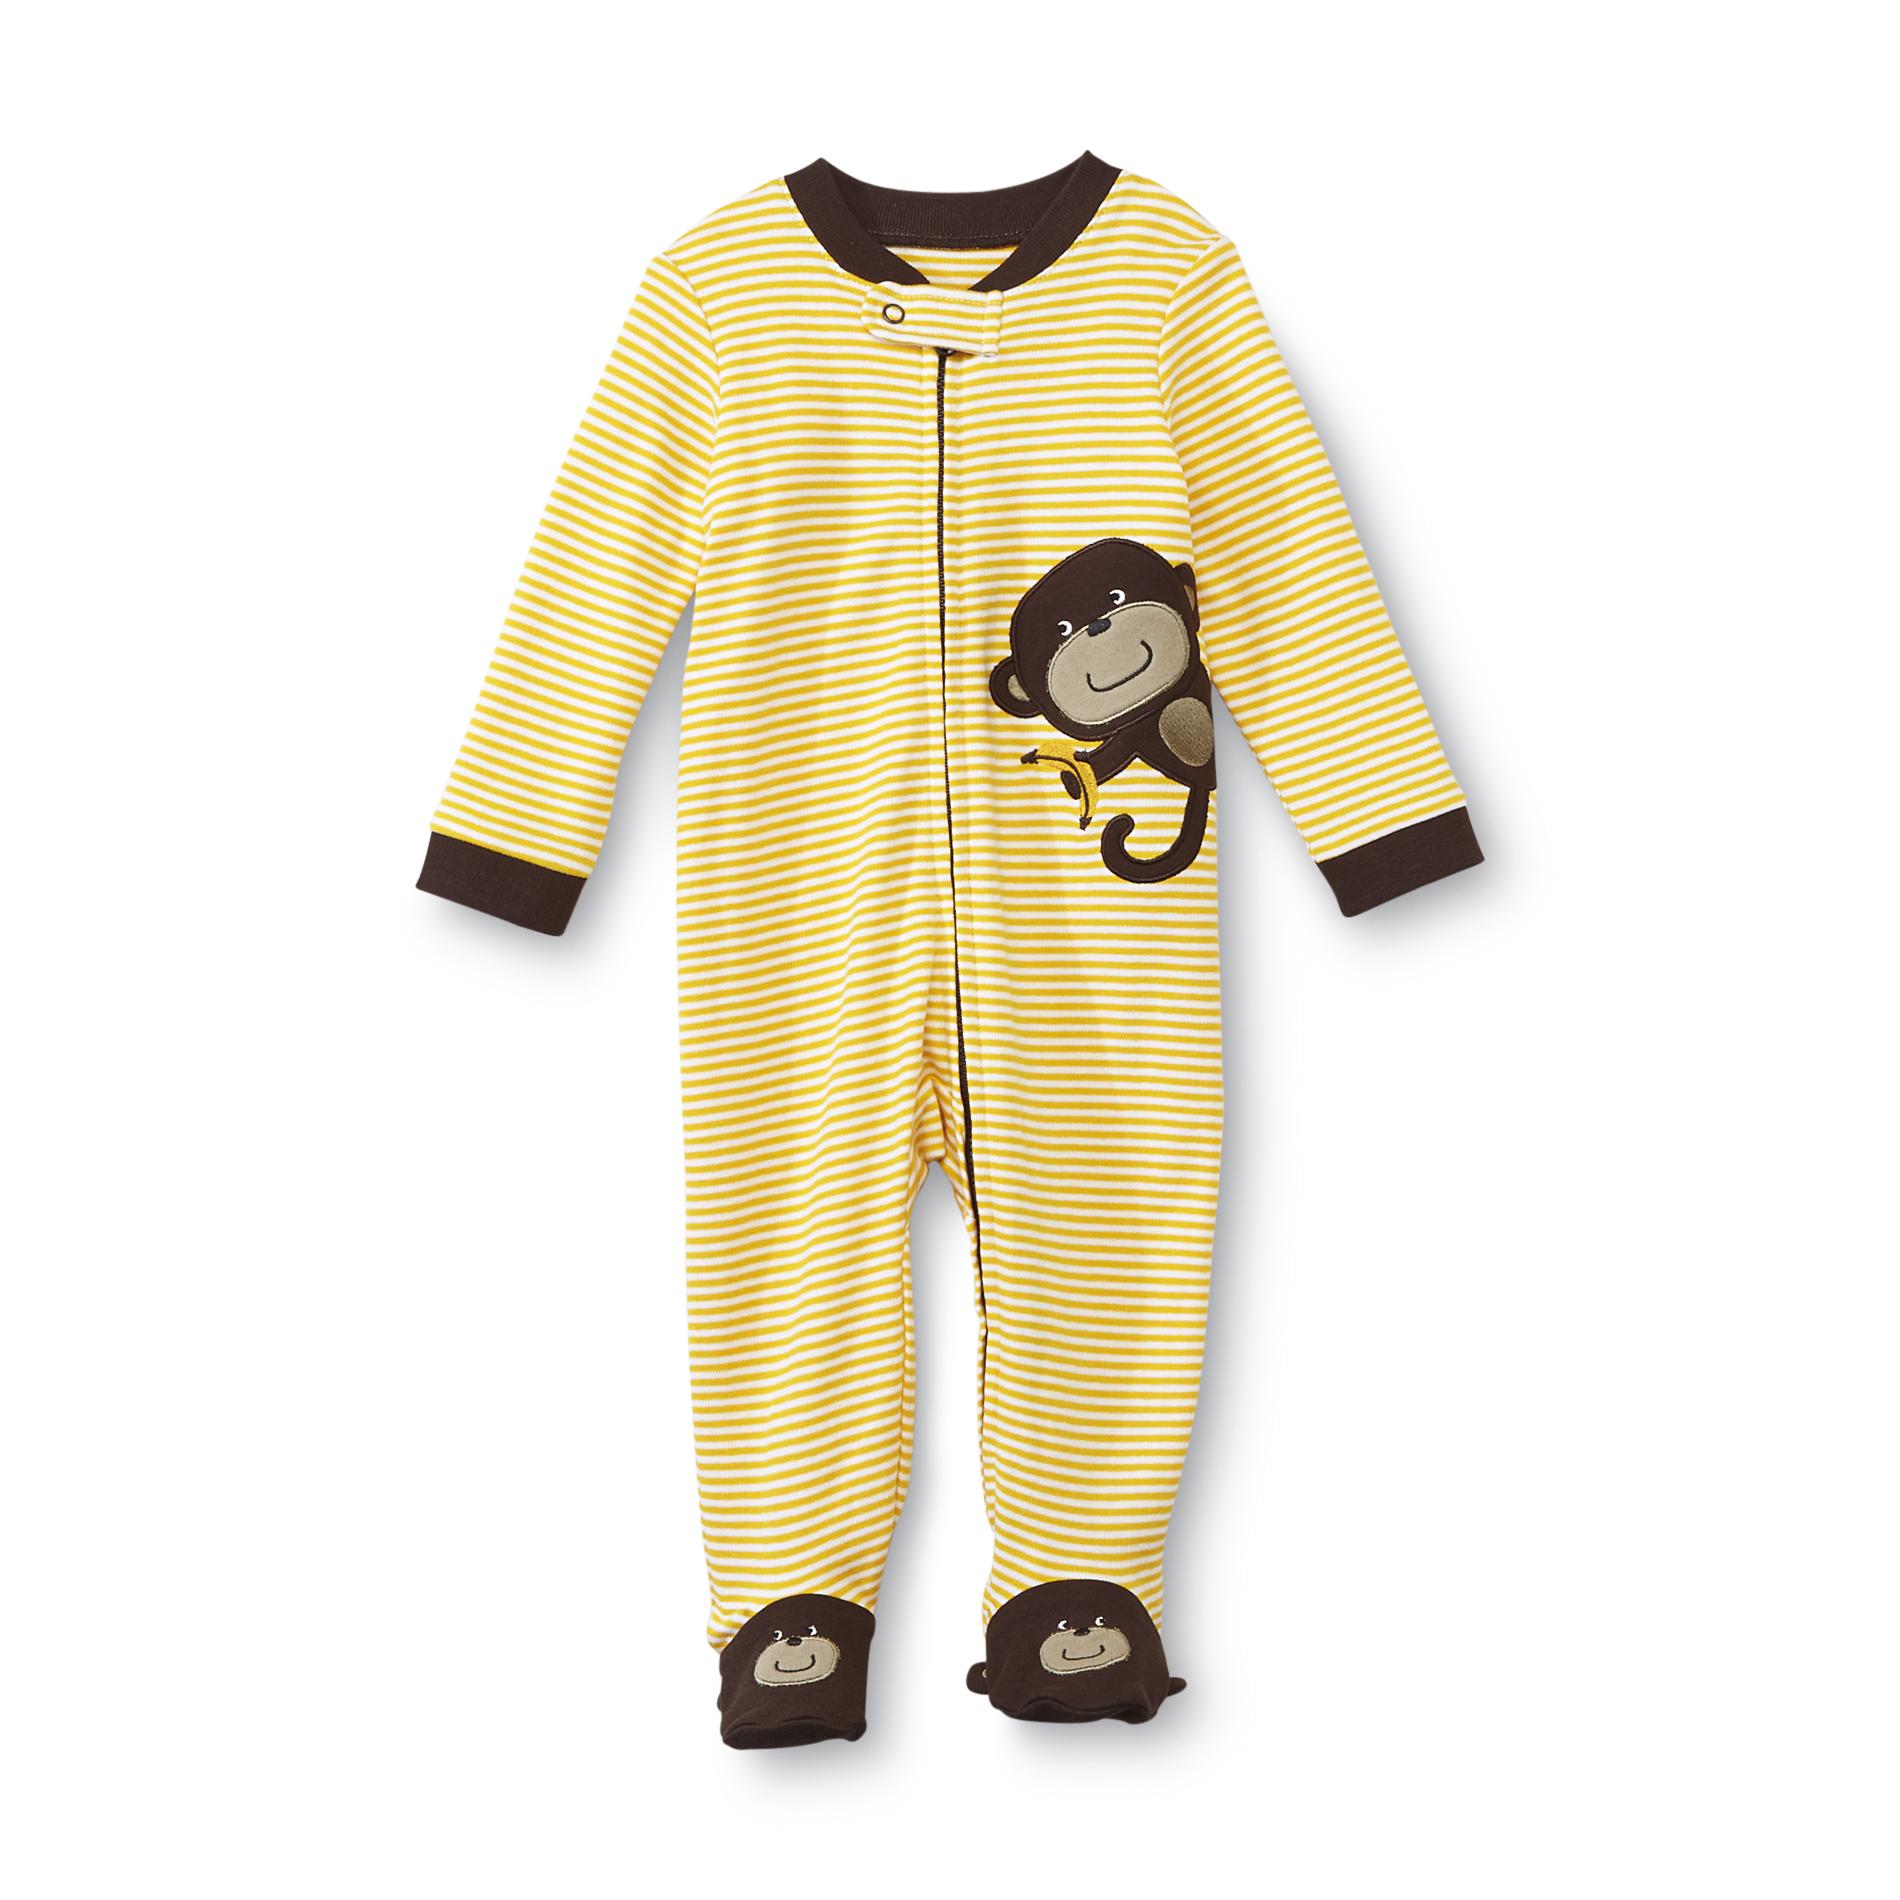 Small Wonders Newborn Boy's Striped Sleeper Pajamas - Monkey